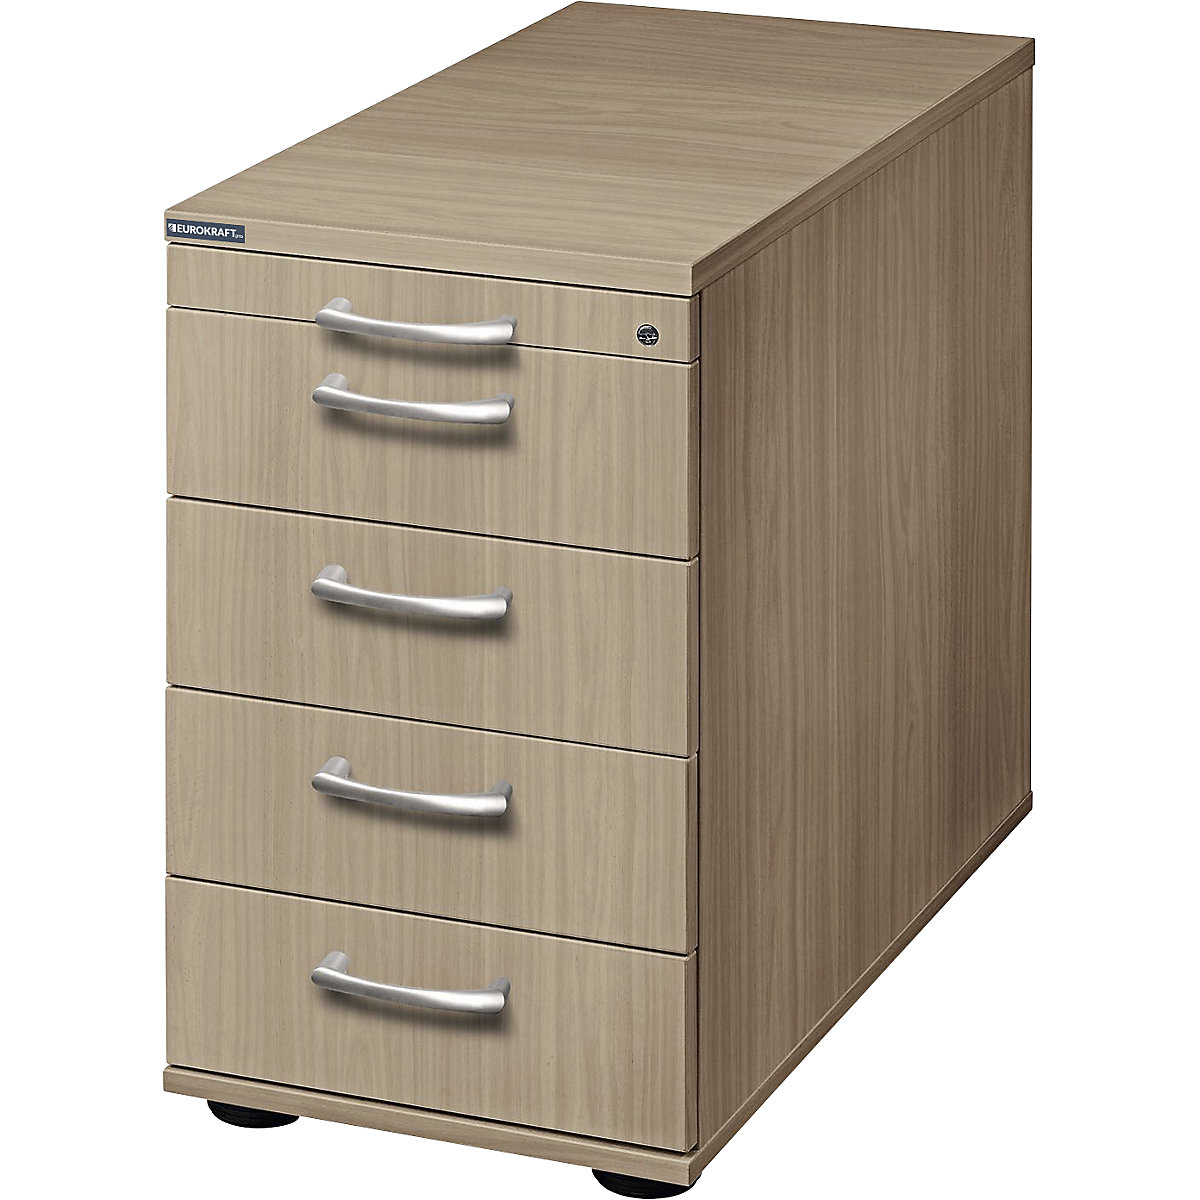 Fixed pedestal ANNY – eurokraft pro, 1 utensil drawer, 4 storage drawers, walnut finish-8